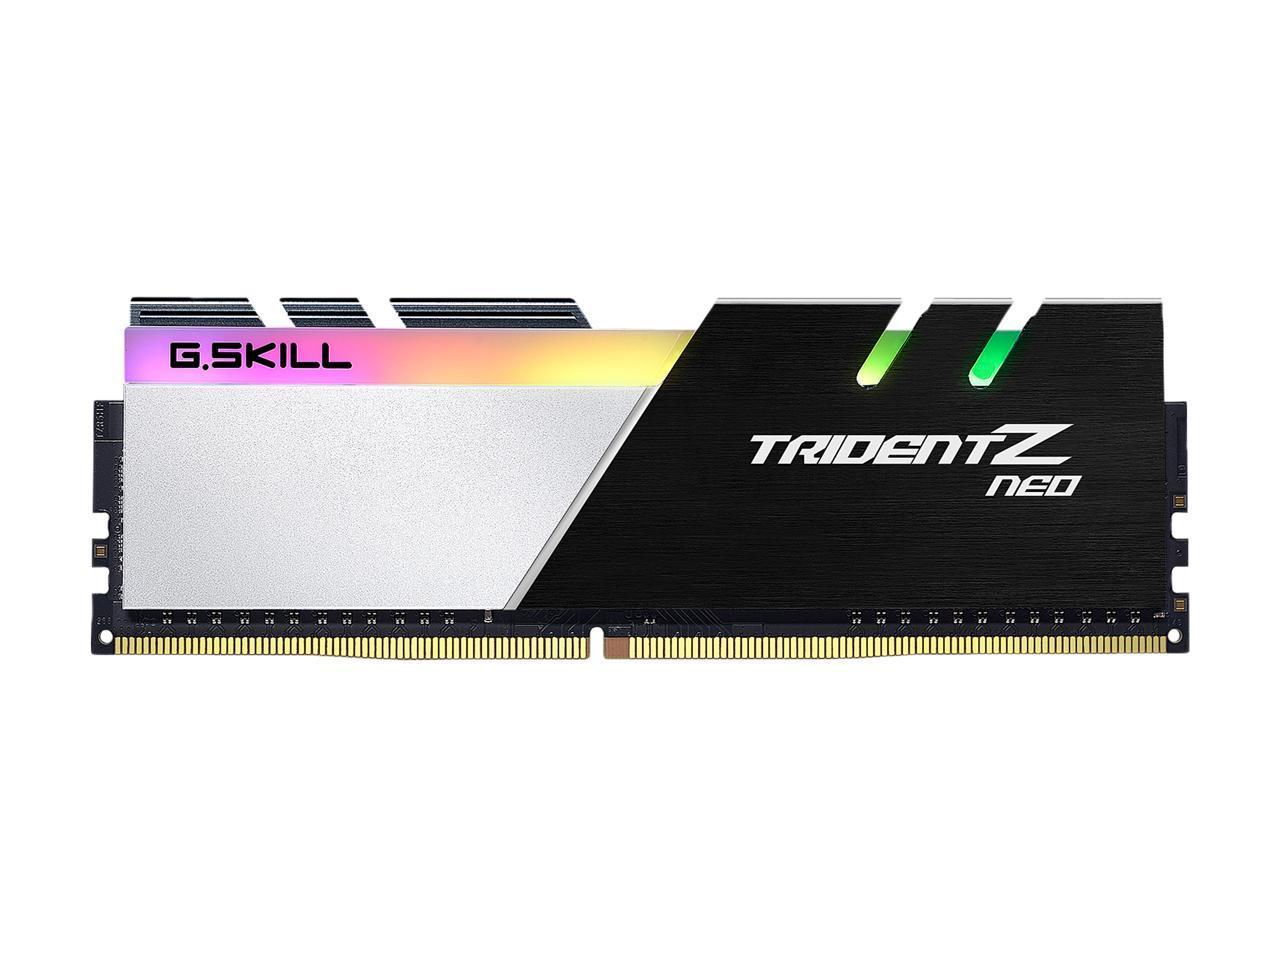 G-SKILL TRIDENT Z NEO SERIES 16G*2 DDR4 3600MHZ